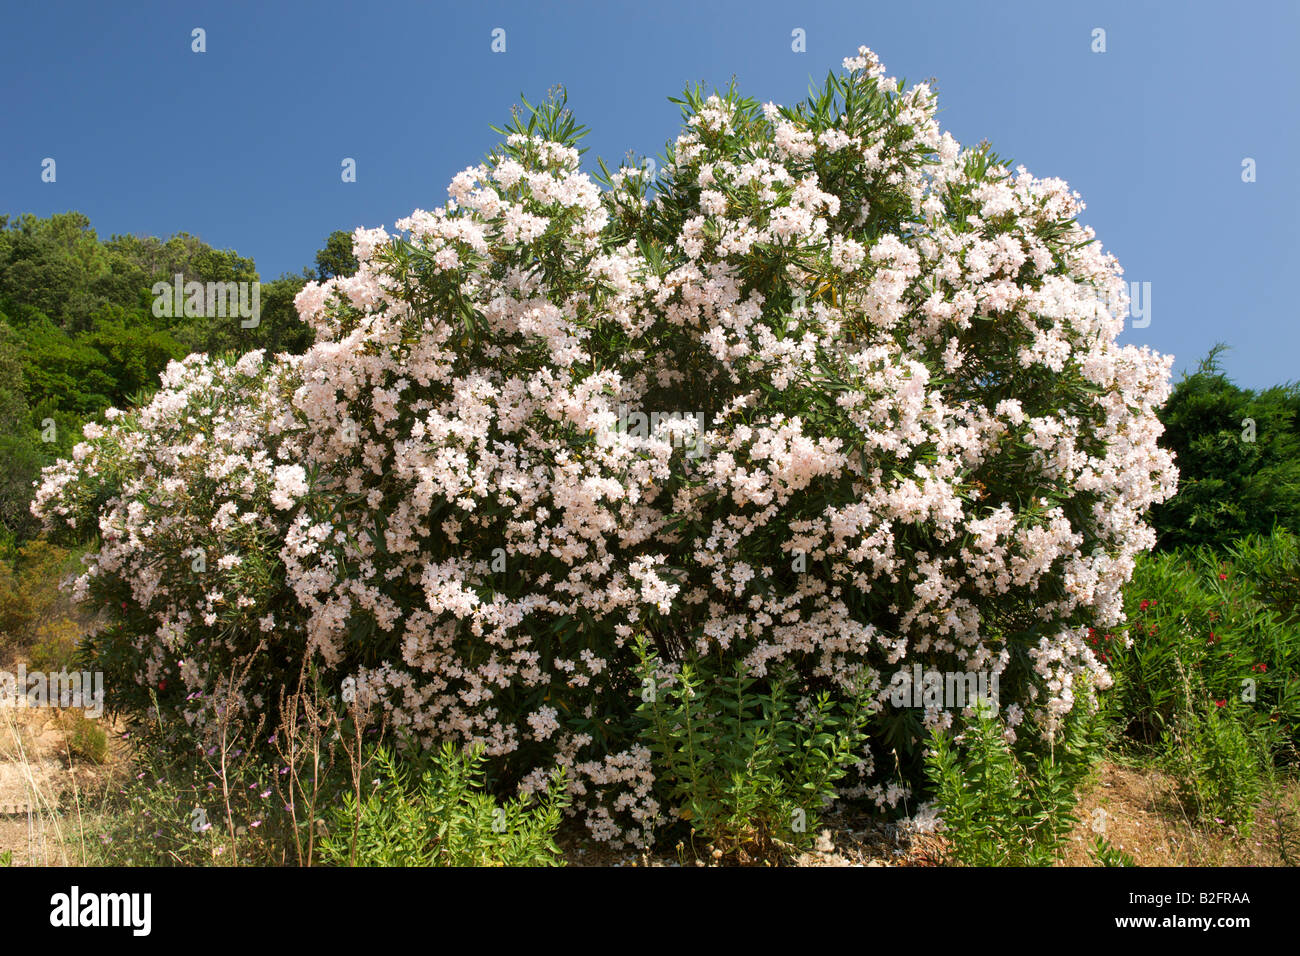 Oleander bush (Nerium oleander) in Corsica. Stock Photo